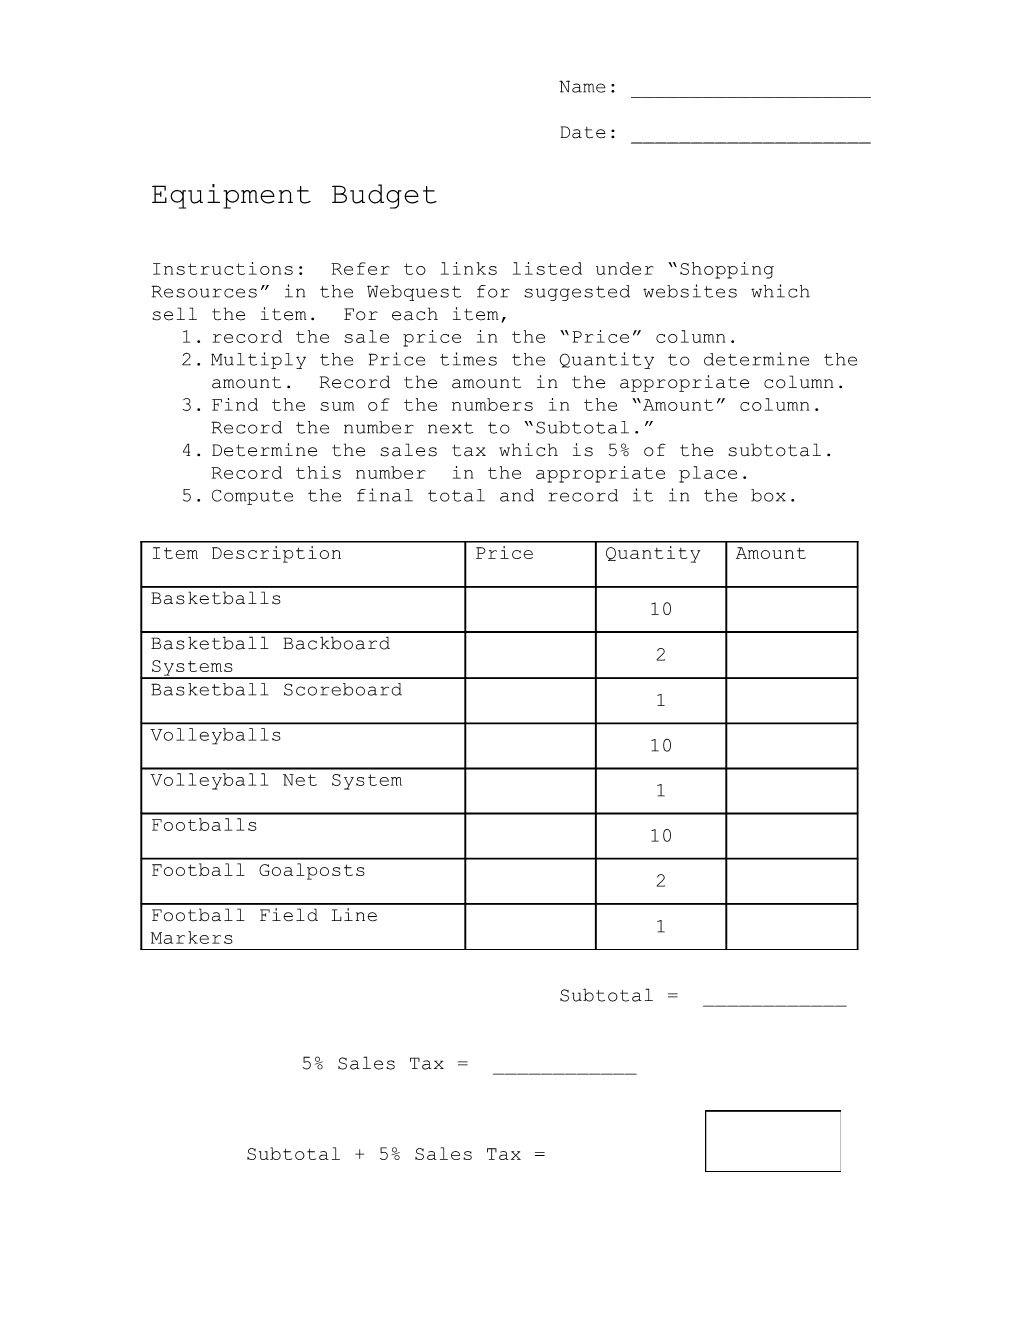 Equipment Budget